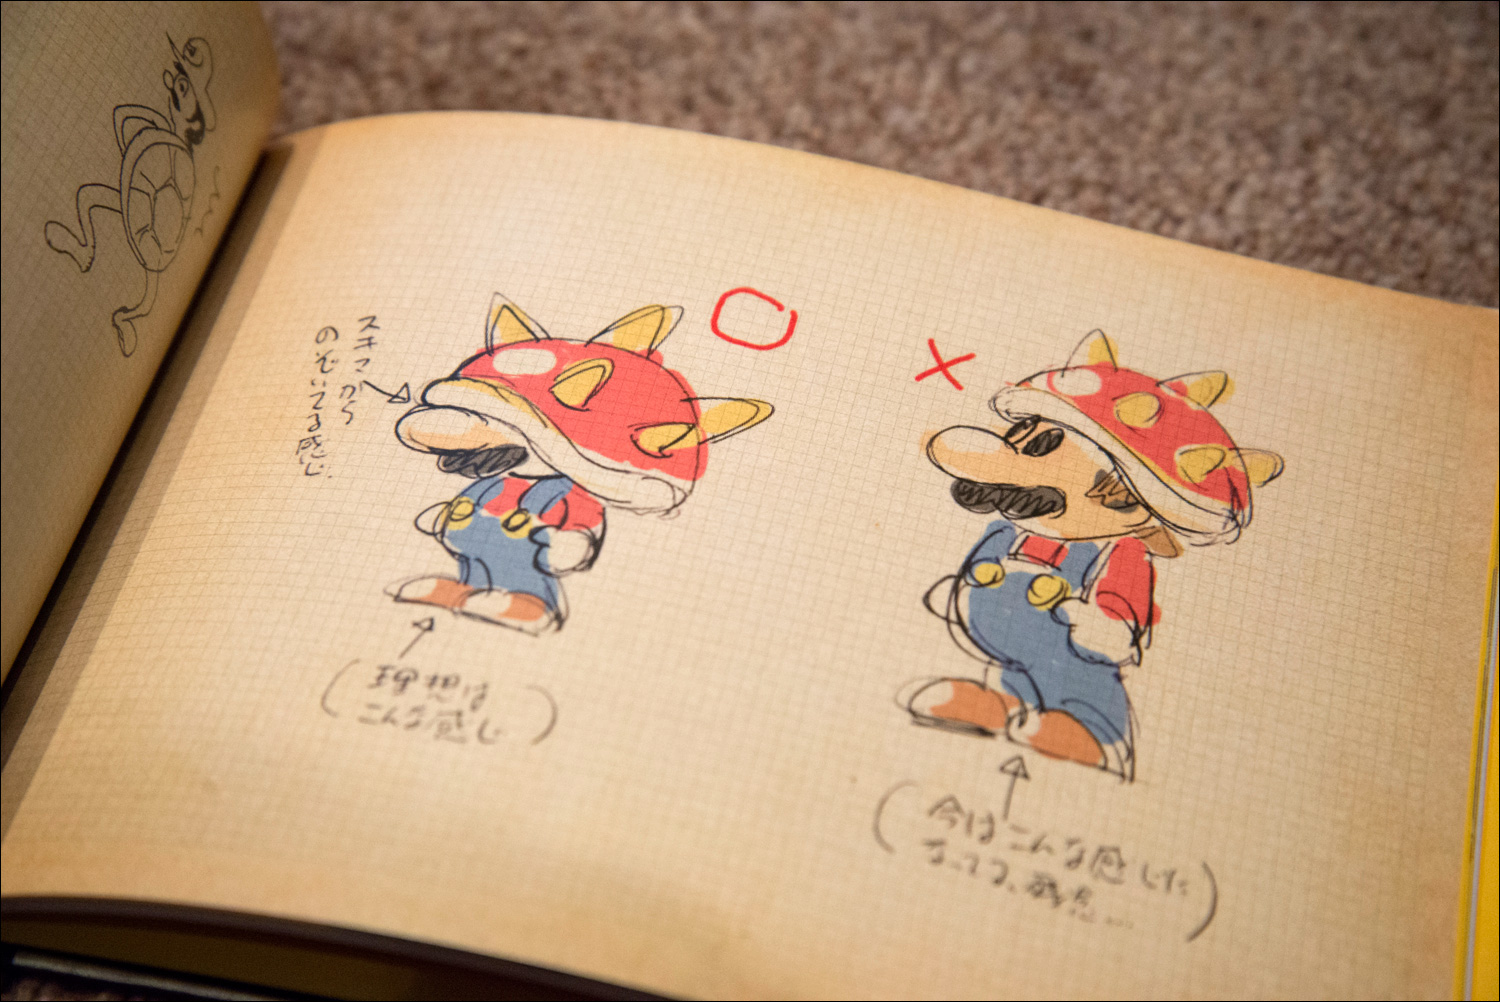 Super-Mario-Maker-Amiibo-Bundle-Artbook-Spiny-Cap